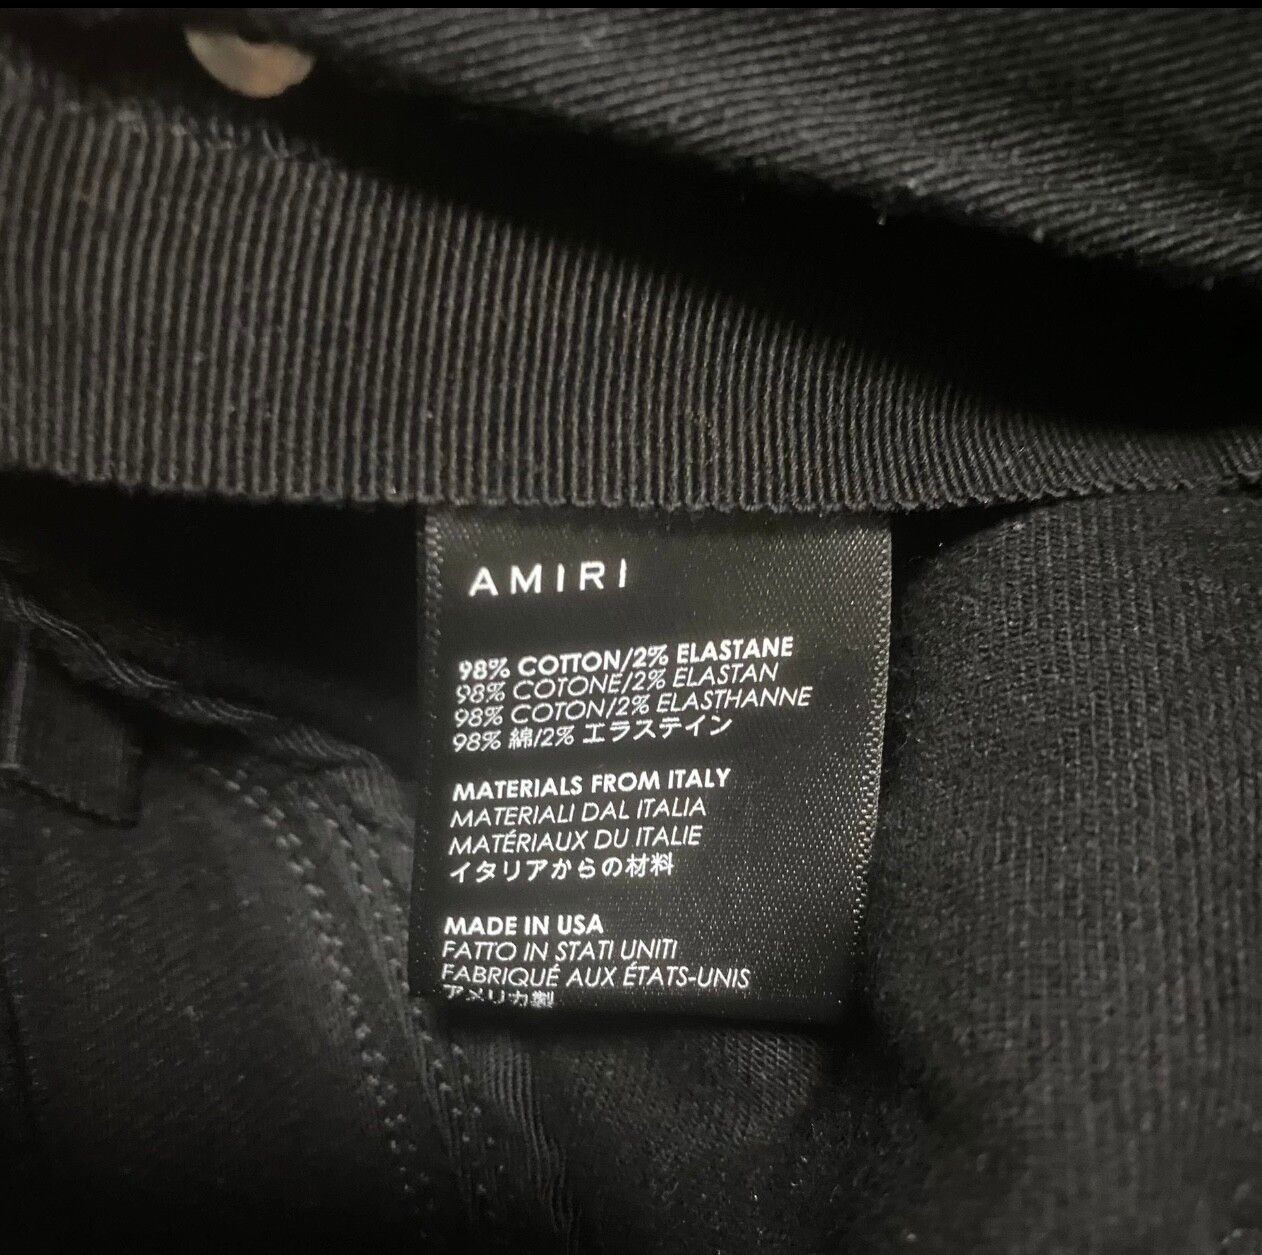 Amiri zebra distressed jeans - 4